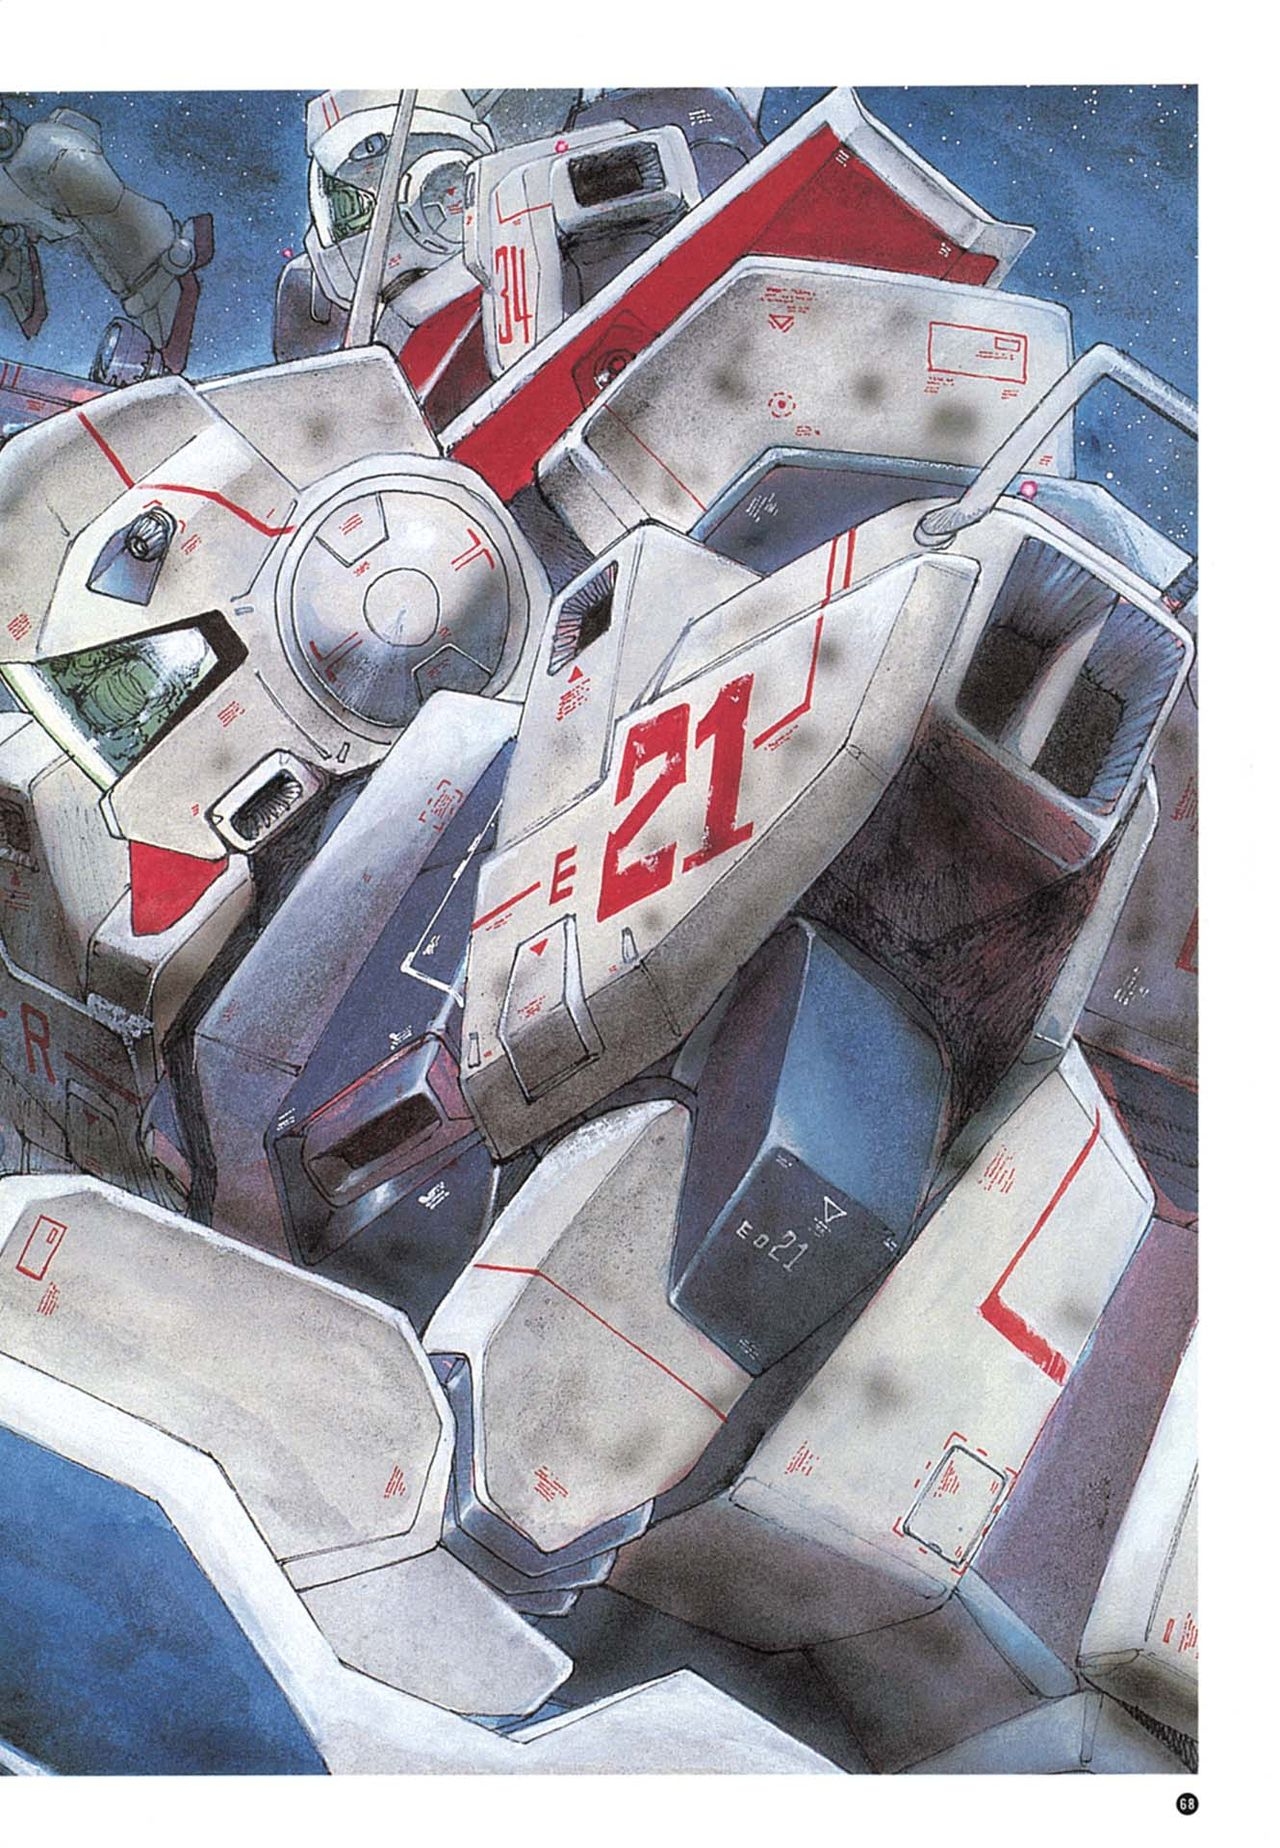 [Kazuhisa Kondo] Kazuhisa Kondo 2D & 3D Works - Go Ahead - From Mobile Suit Gundam to Original Mechanism 67